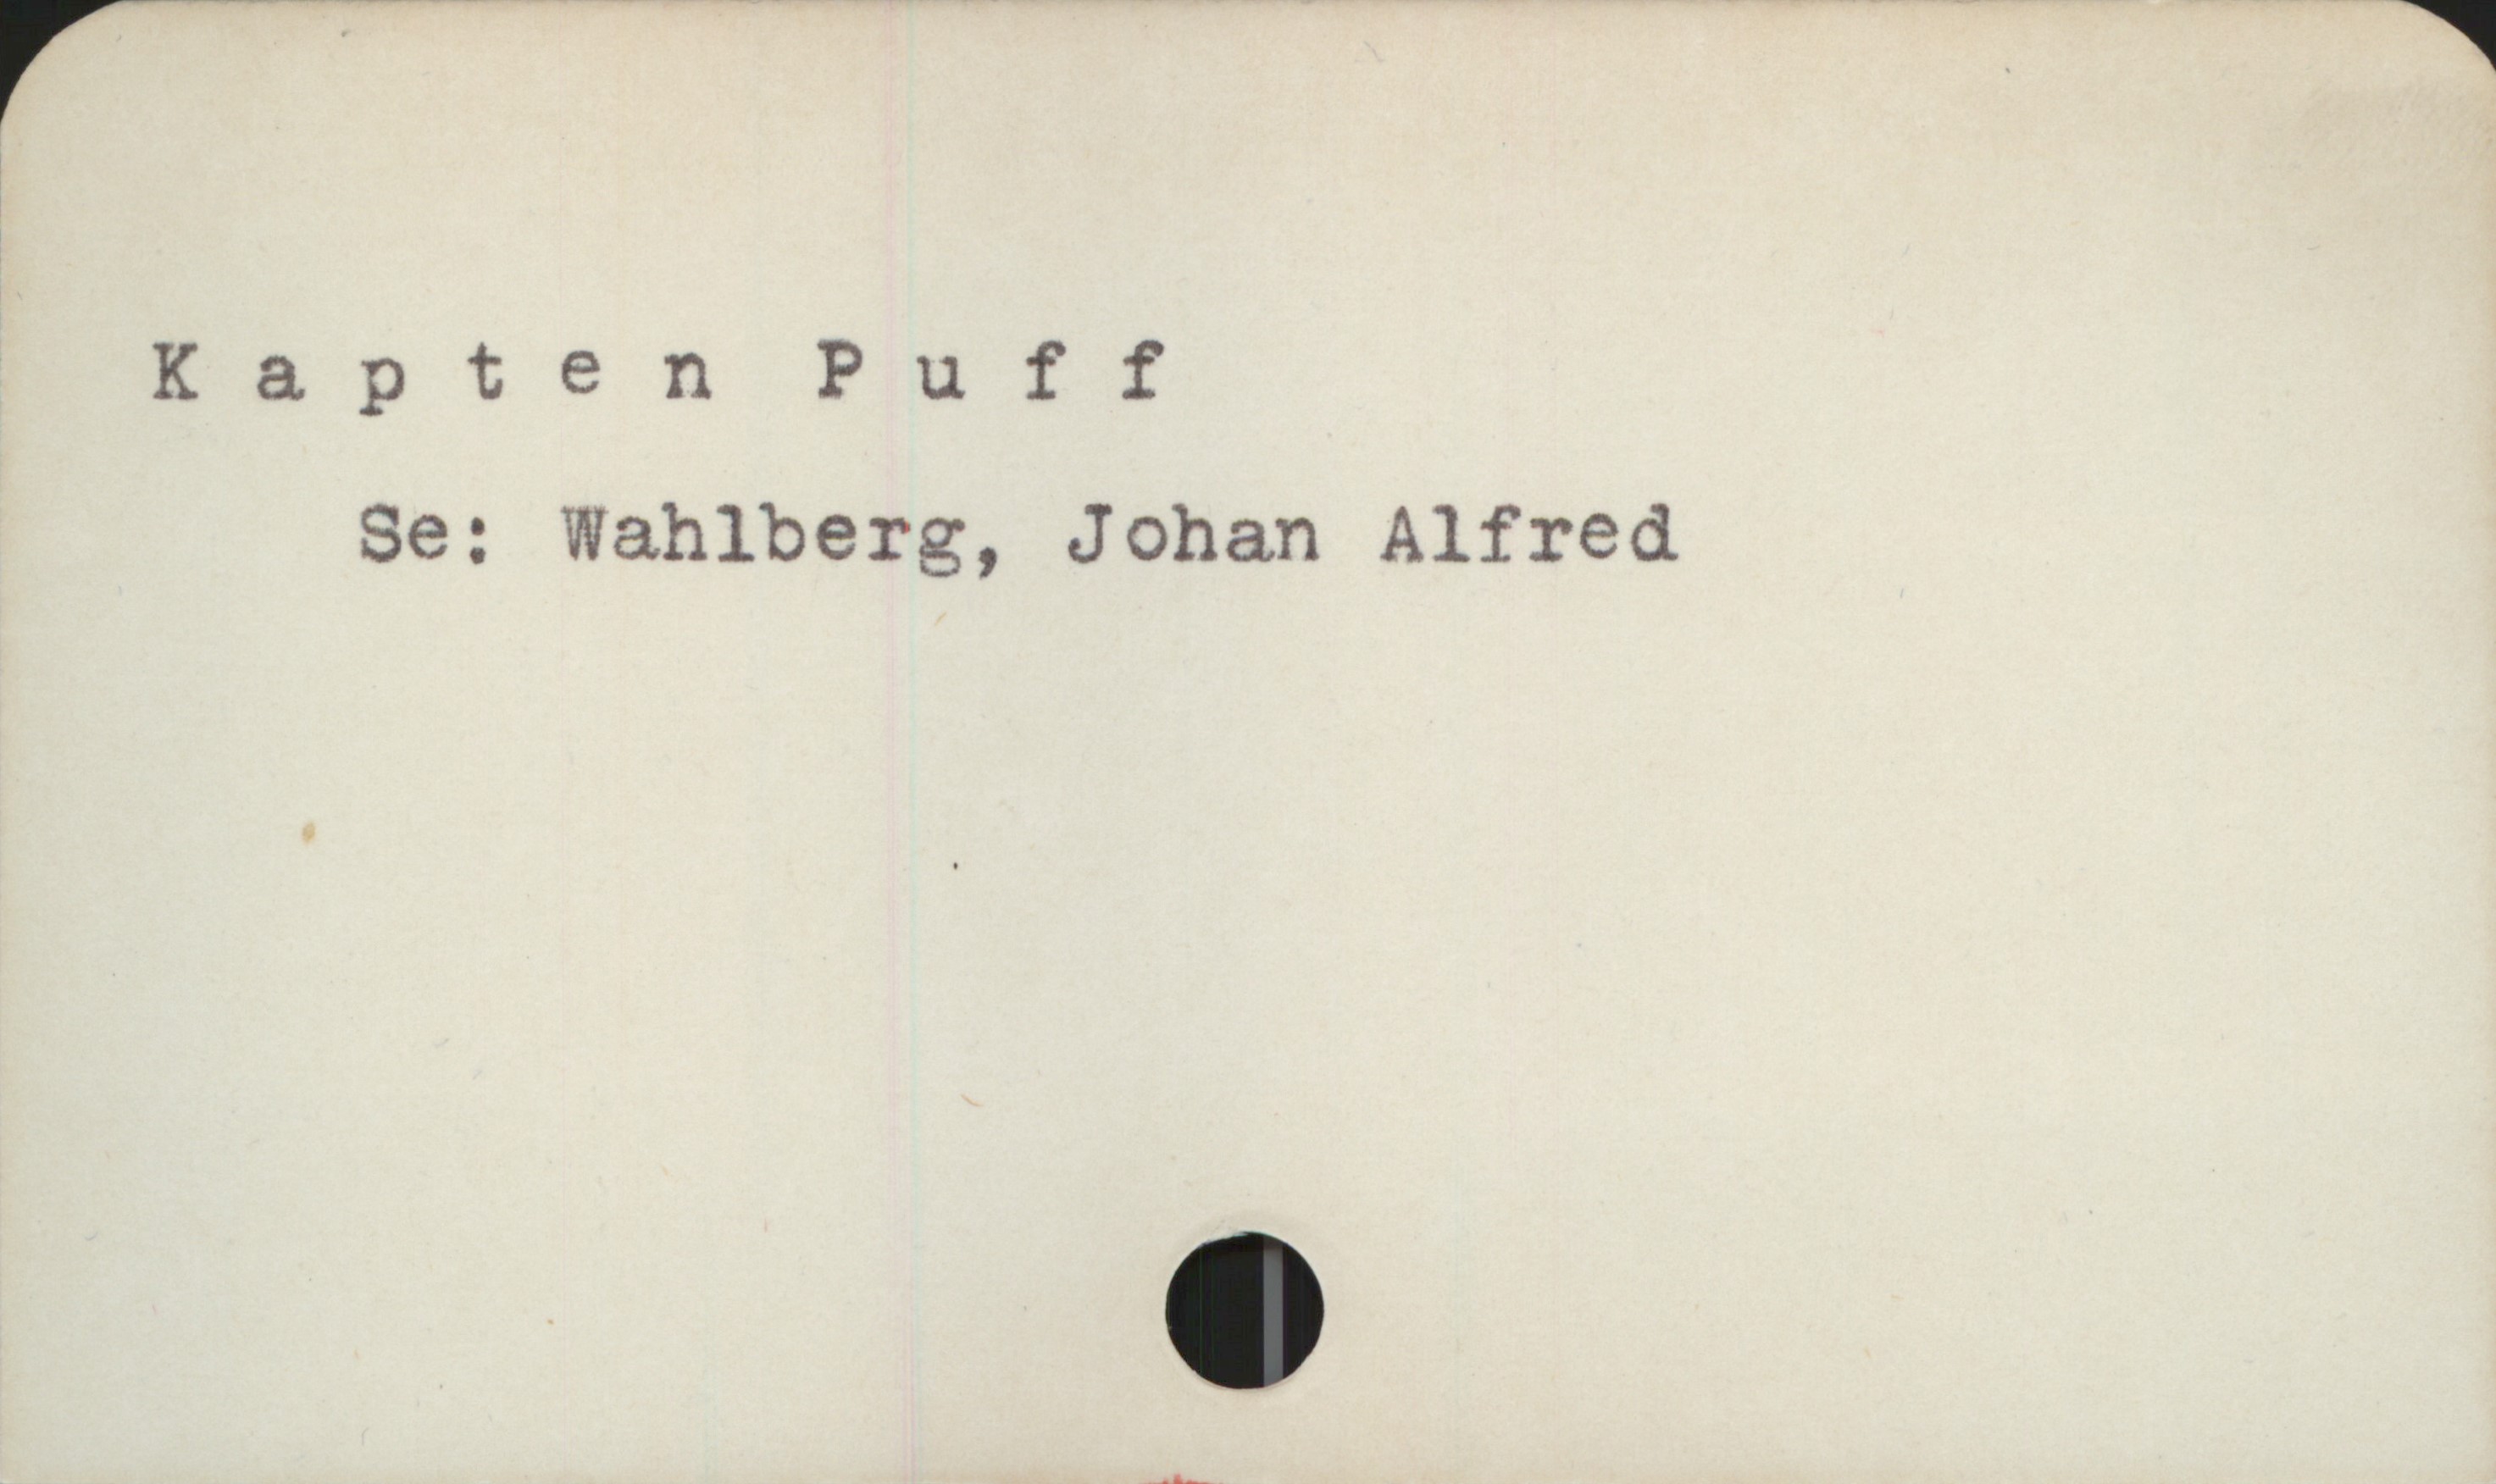  Kapten Puff
Se: Wahlberg, Johan Alfred

